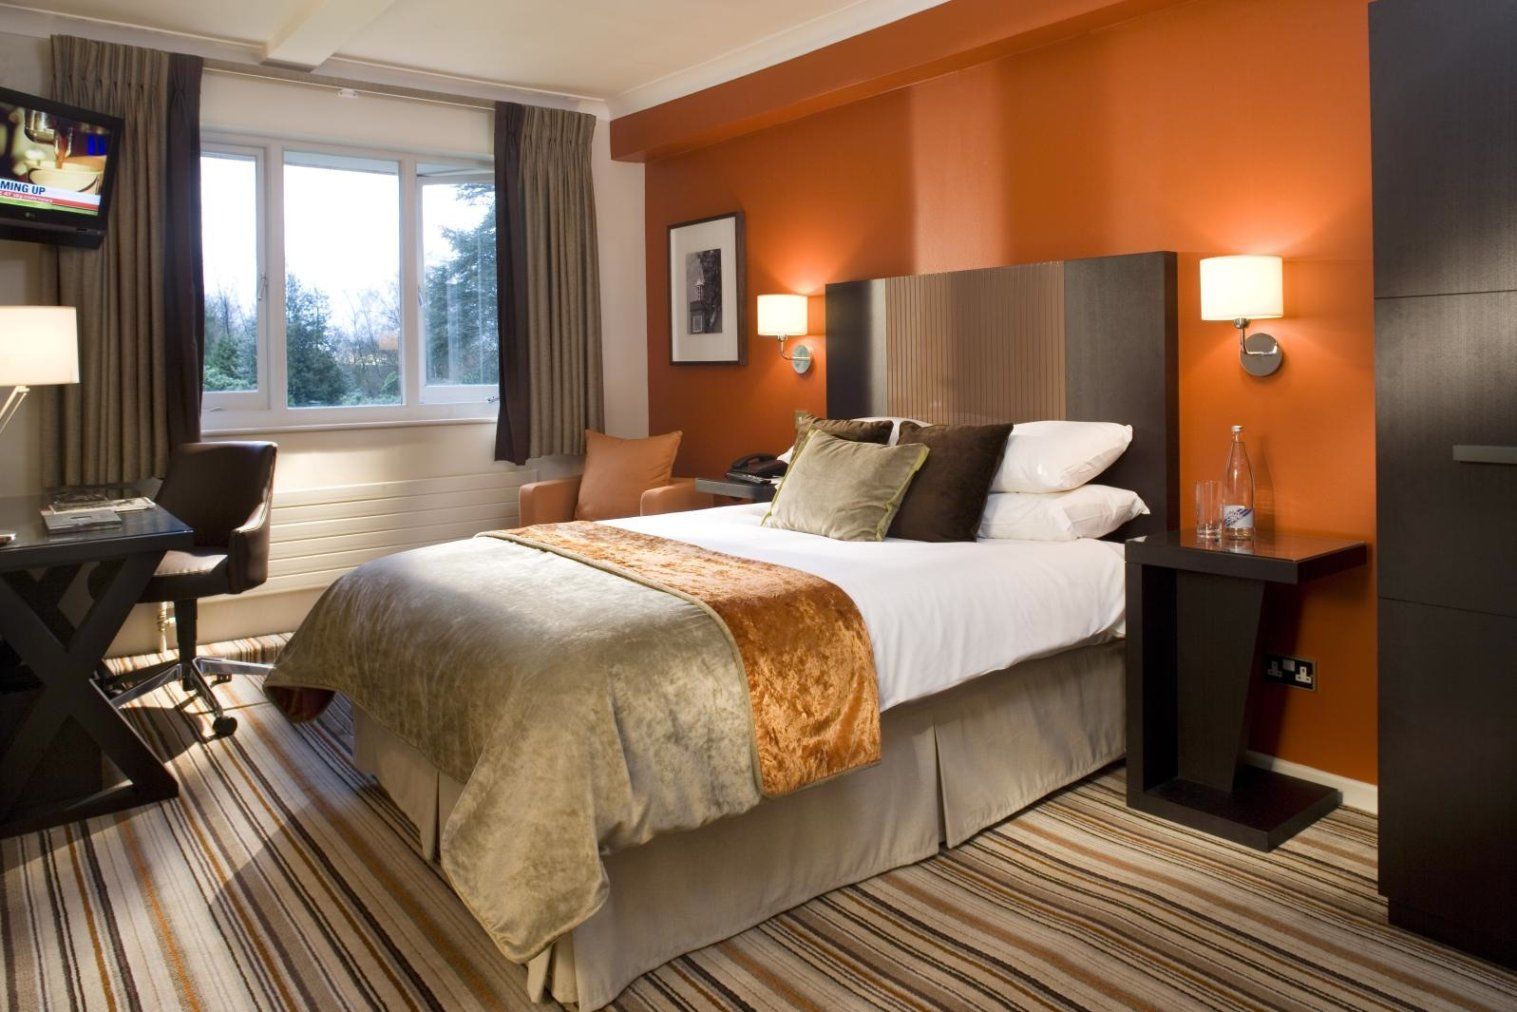 grey and orange bedroom furniture